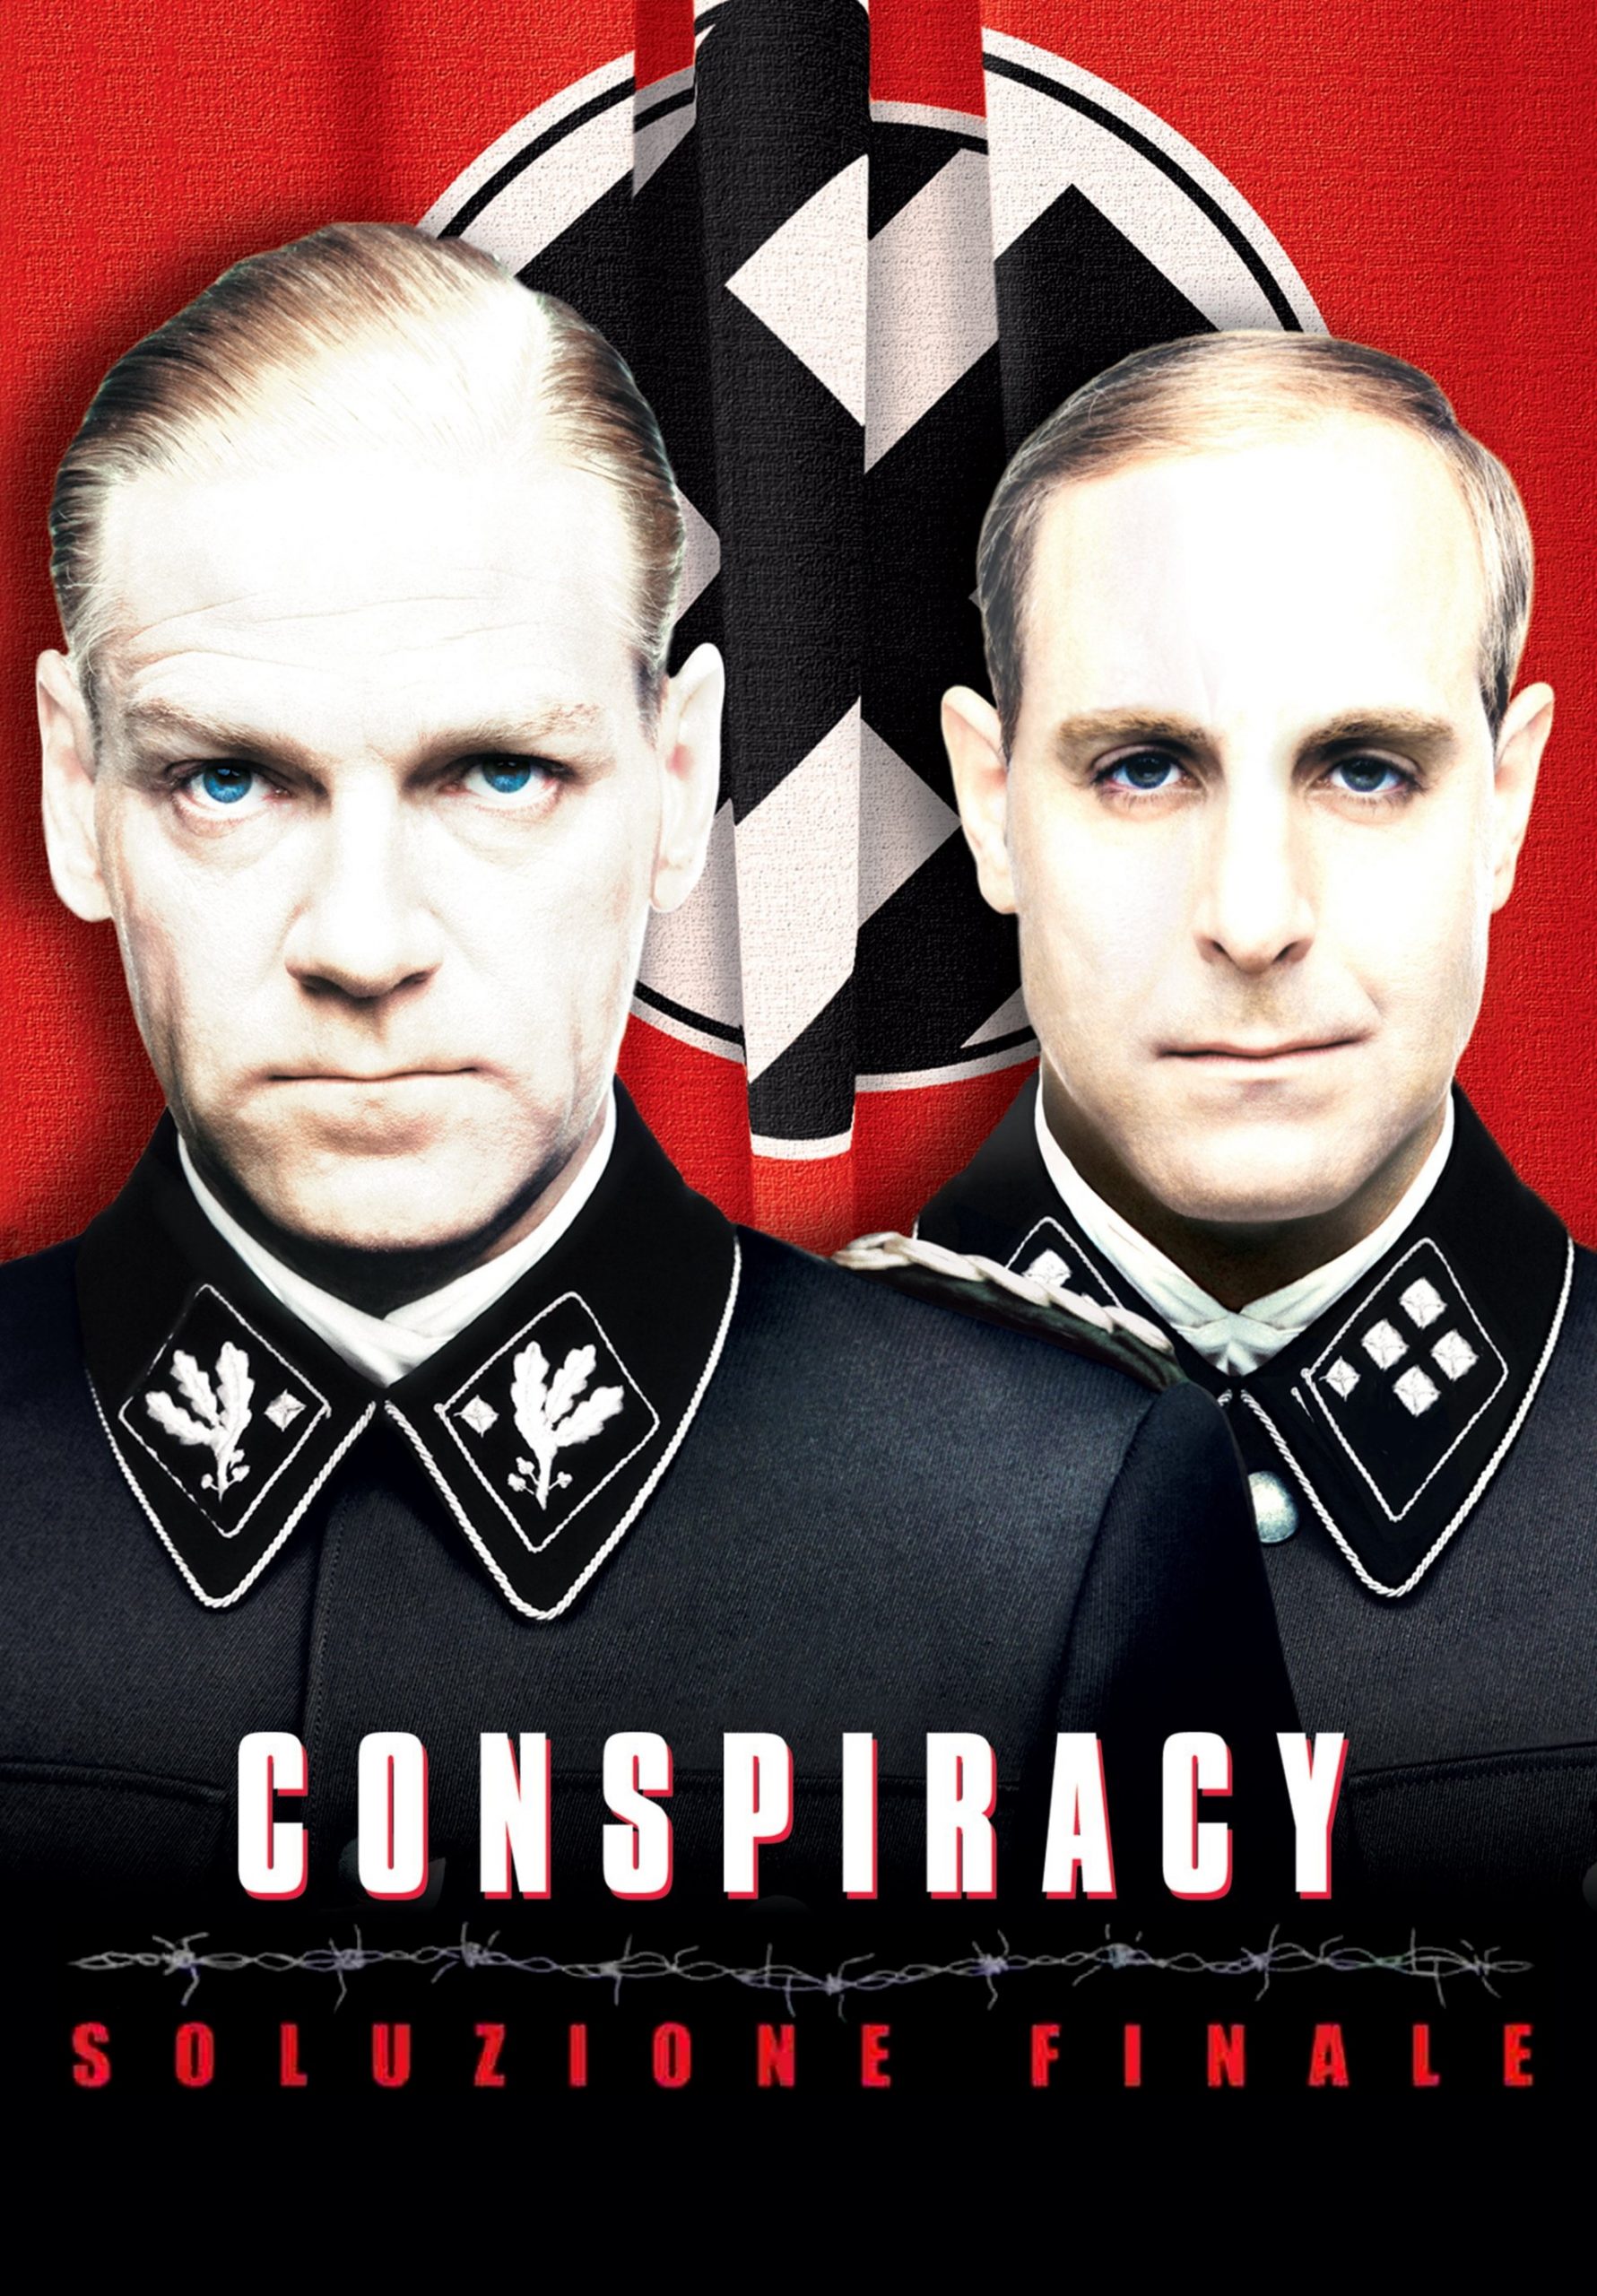 Conspiracy – Soluzione finale [HD] (2001)